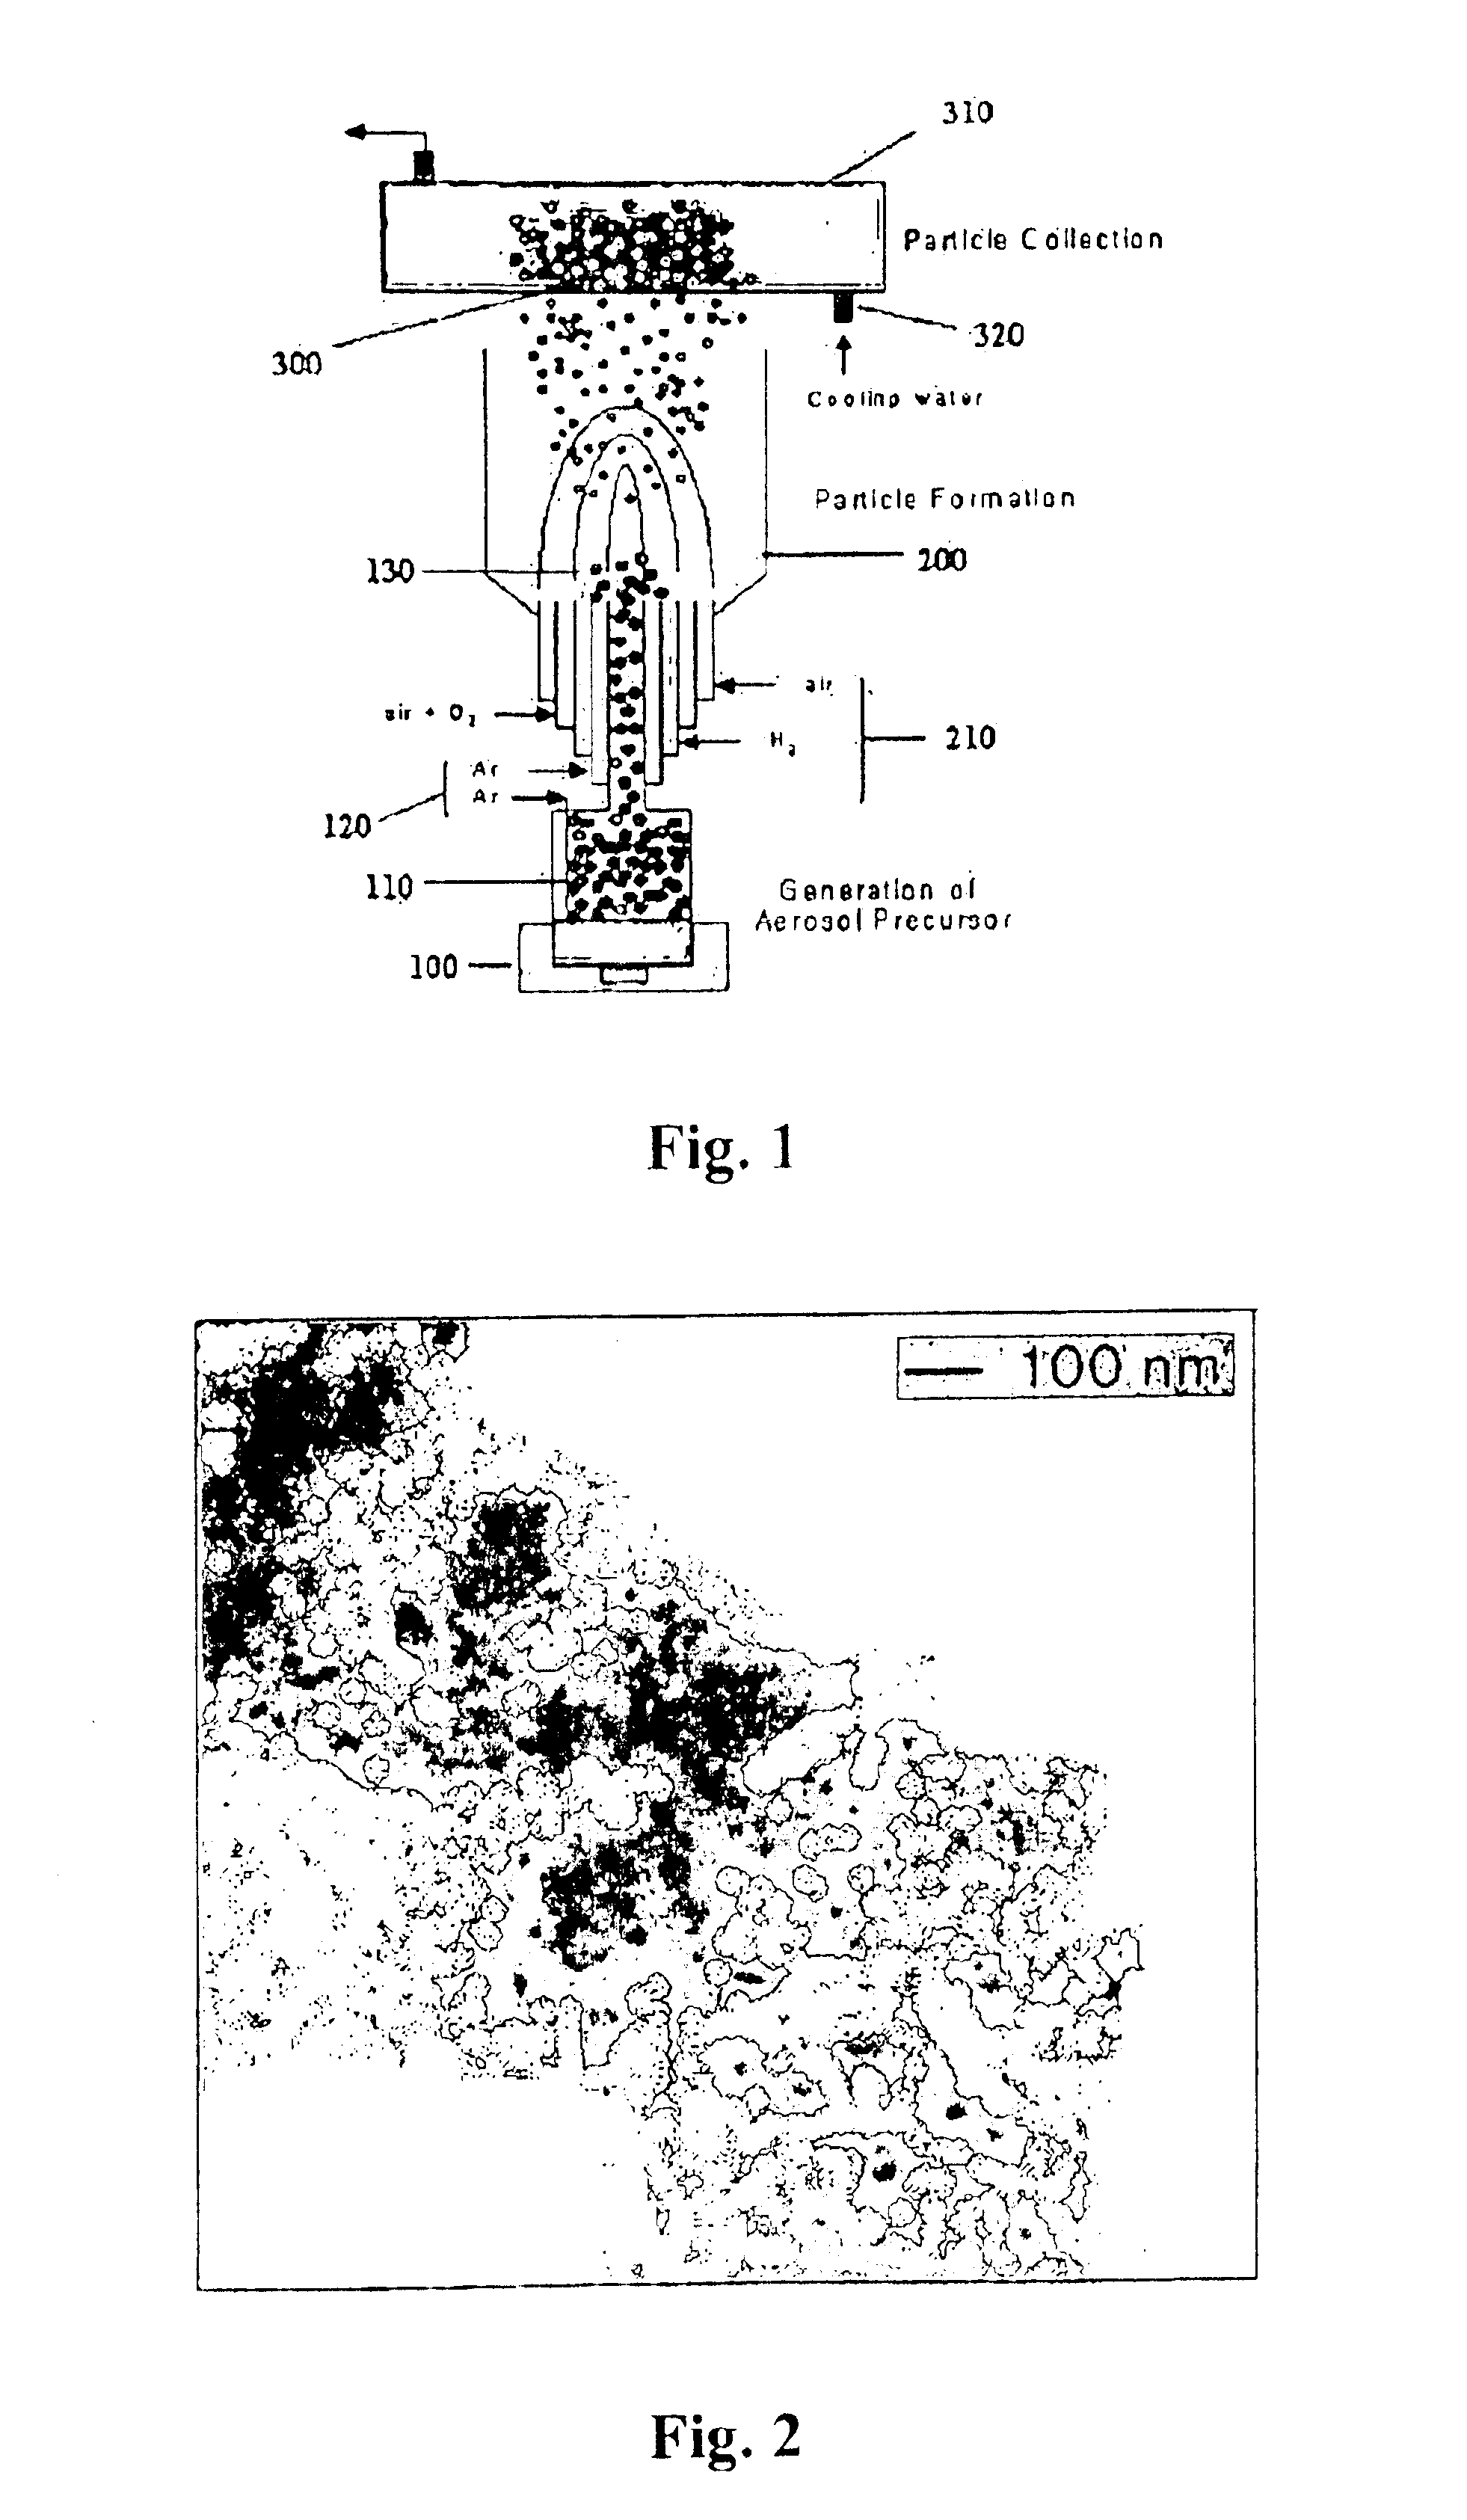 Method of manufacturing nano-sized lithium-cobalt oxides by flame spraying pyrolysis